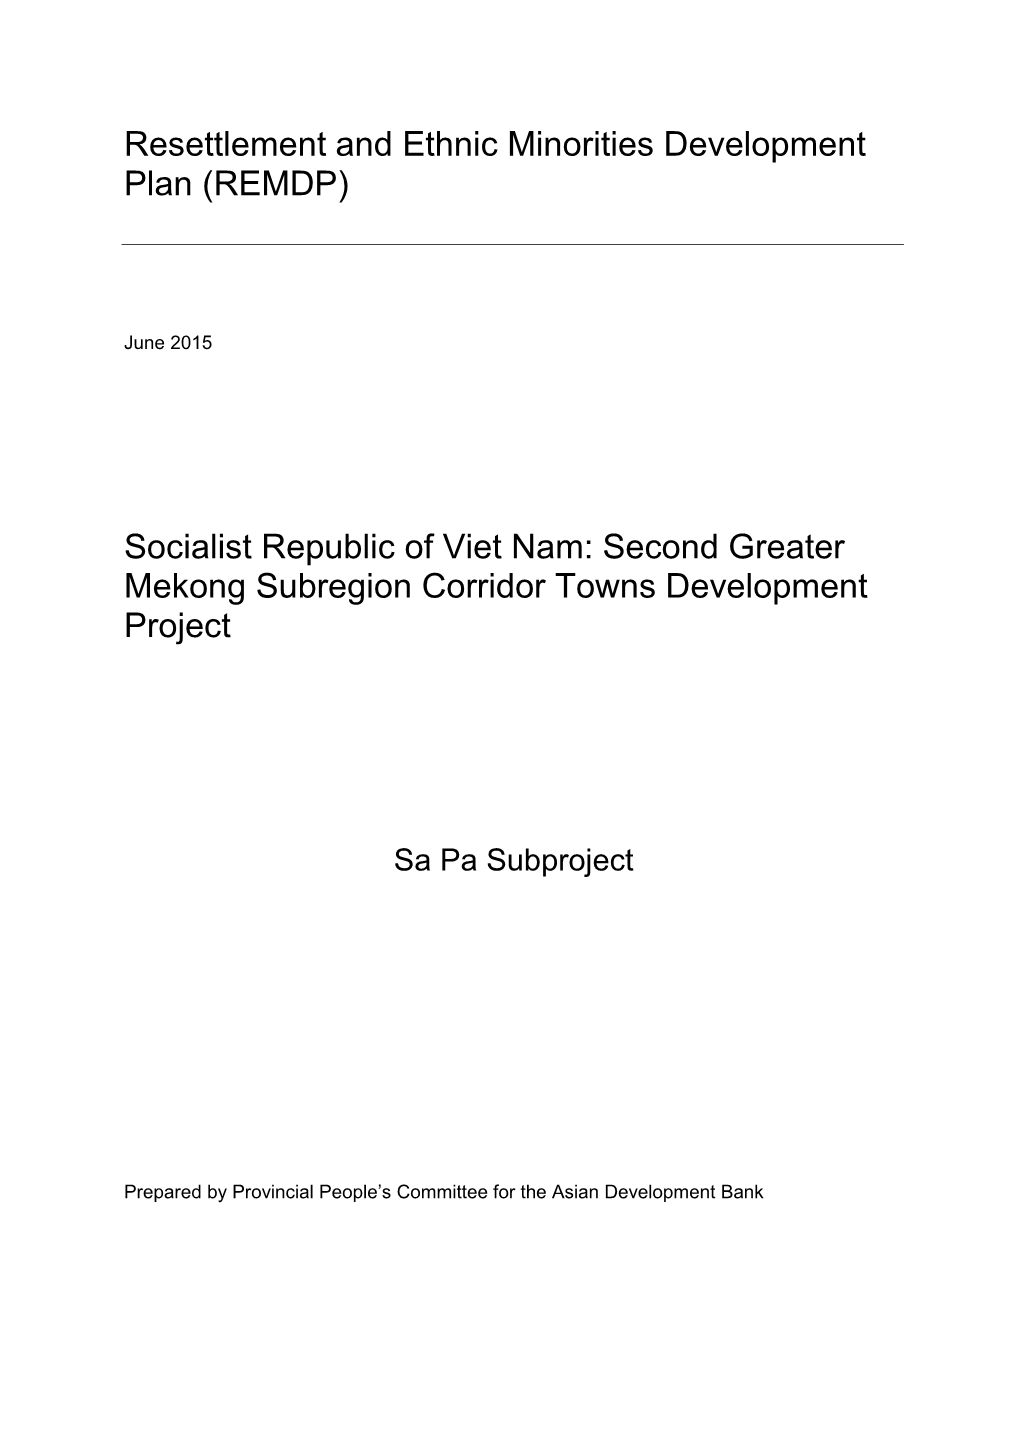 46443-004: Sa Pa Subproject Resettlement and Ethnic Minorities Development Plan